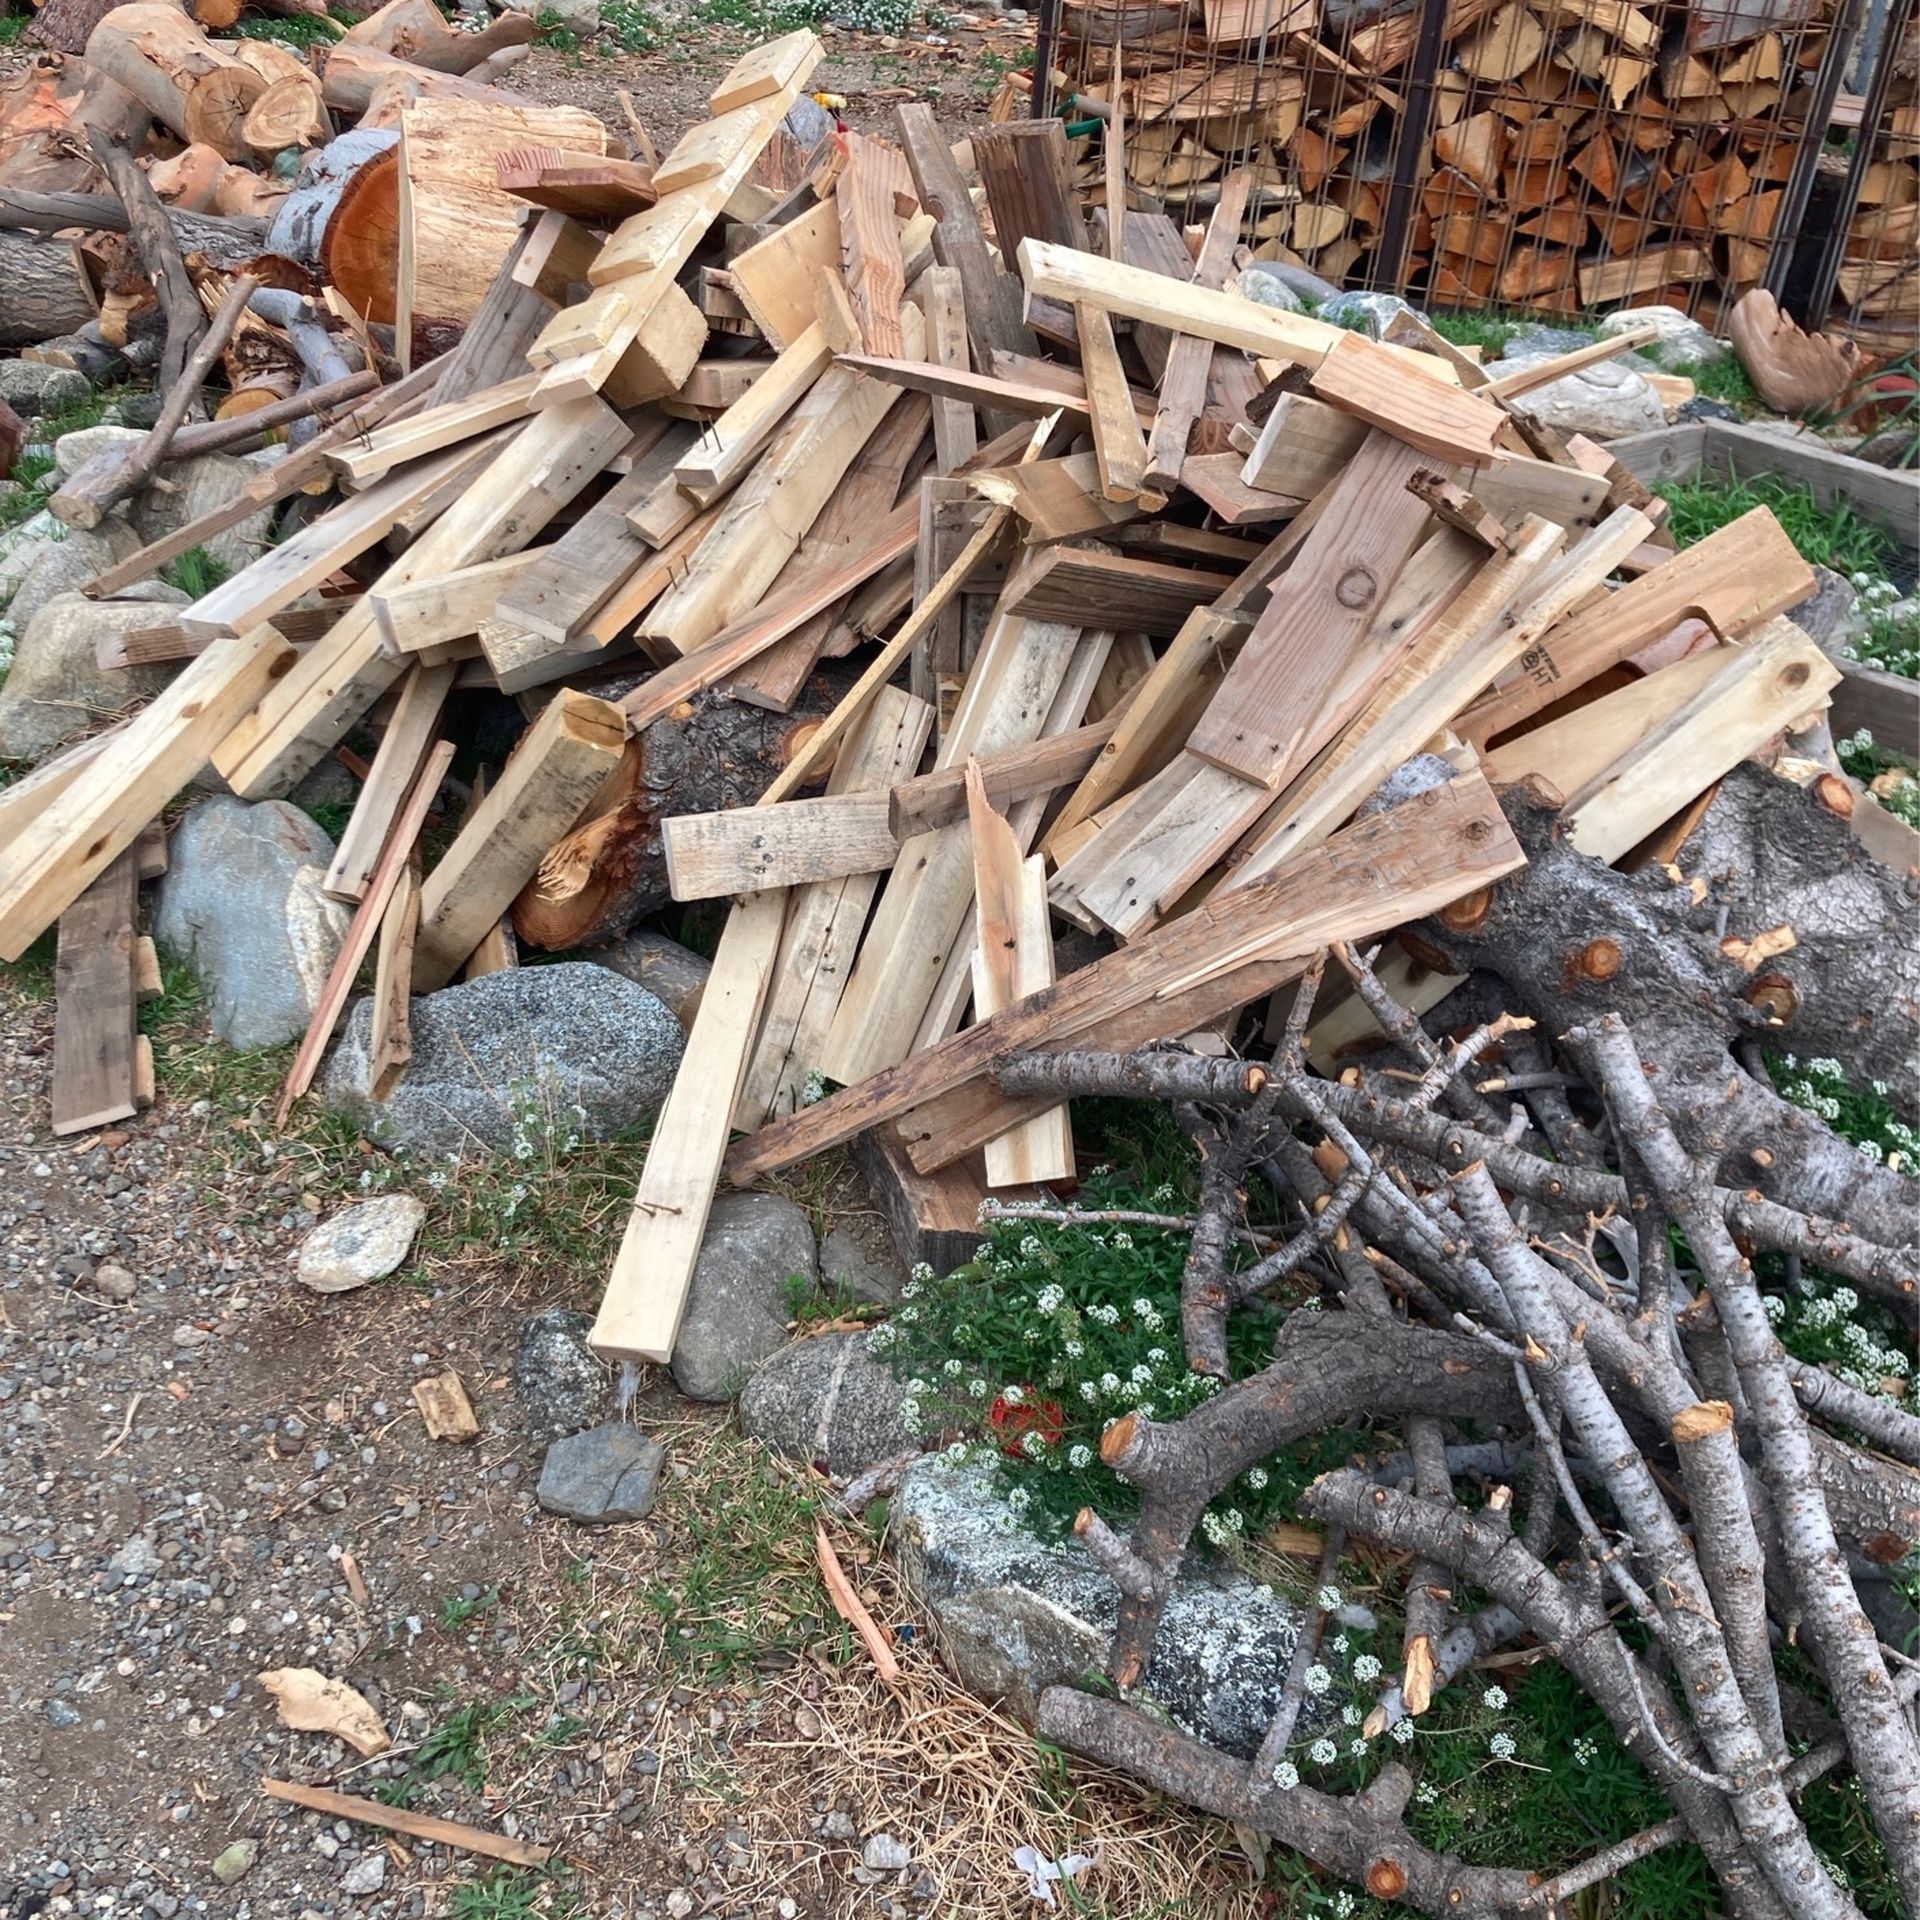 Pallet/firewood